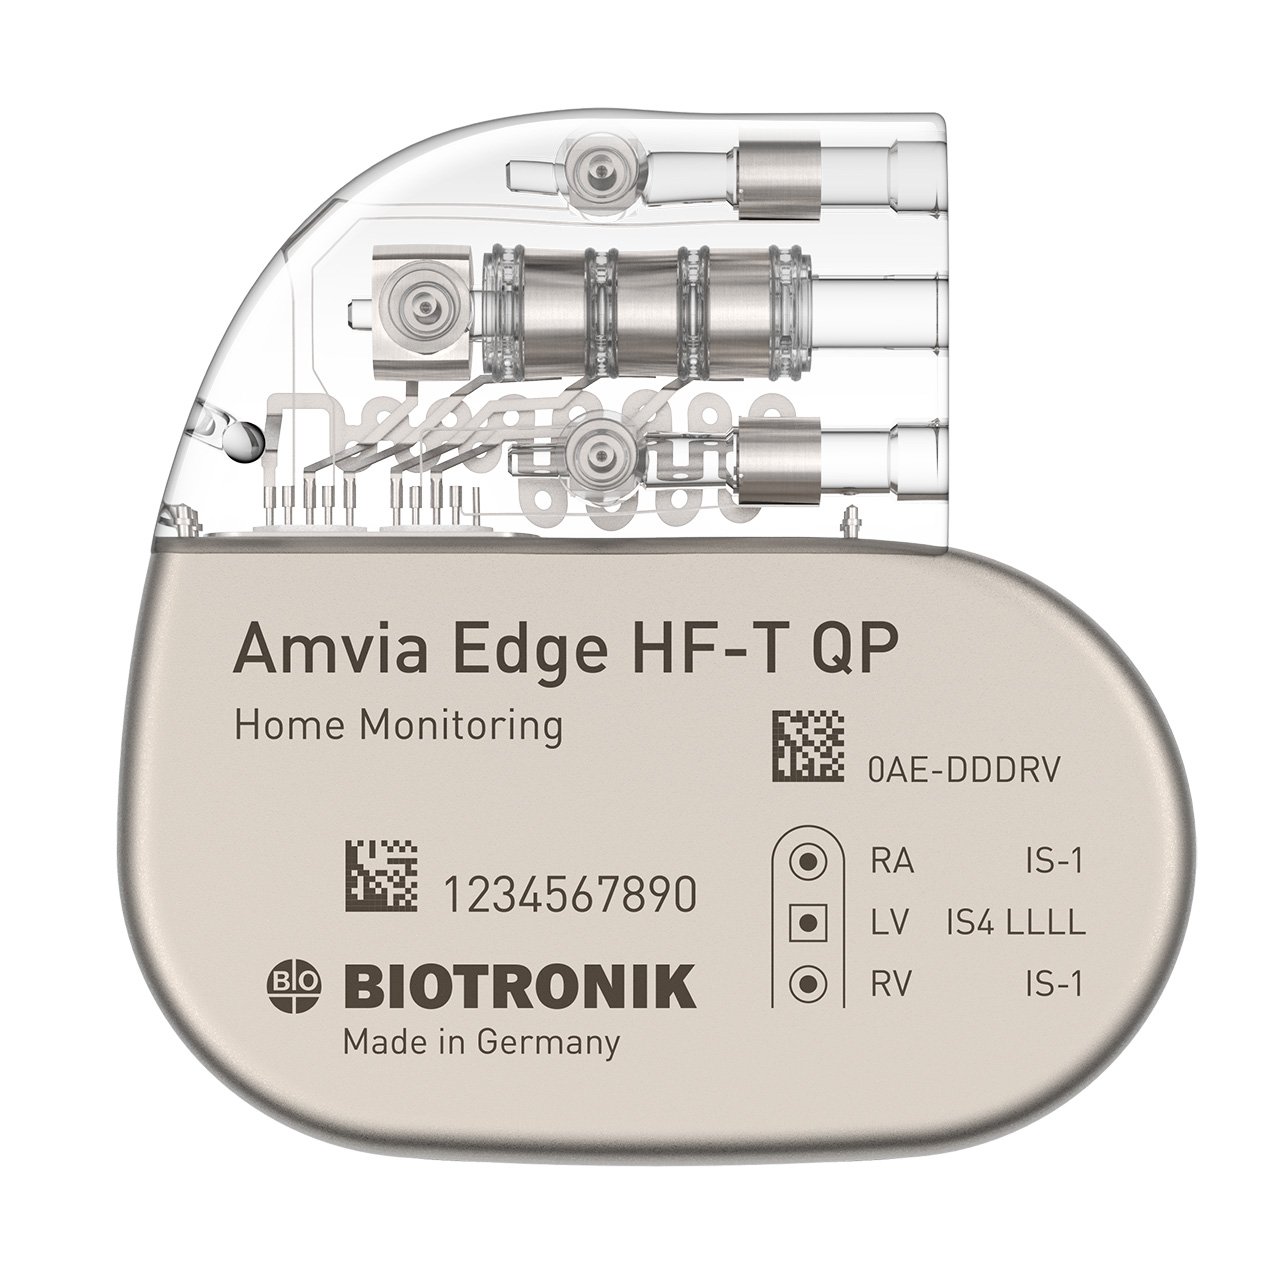 Amvia Edge HF-T QP CRT Pacemaker, frontal